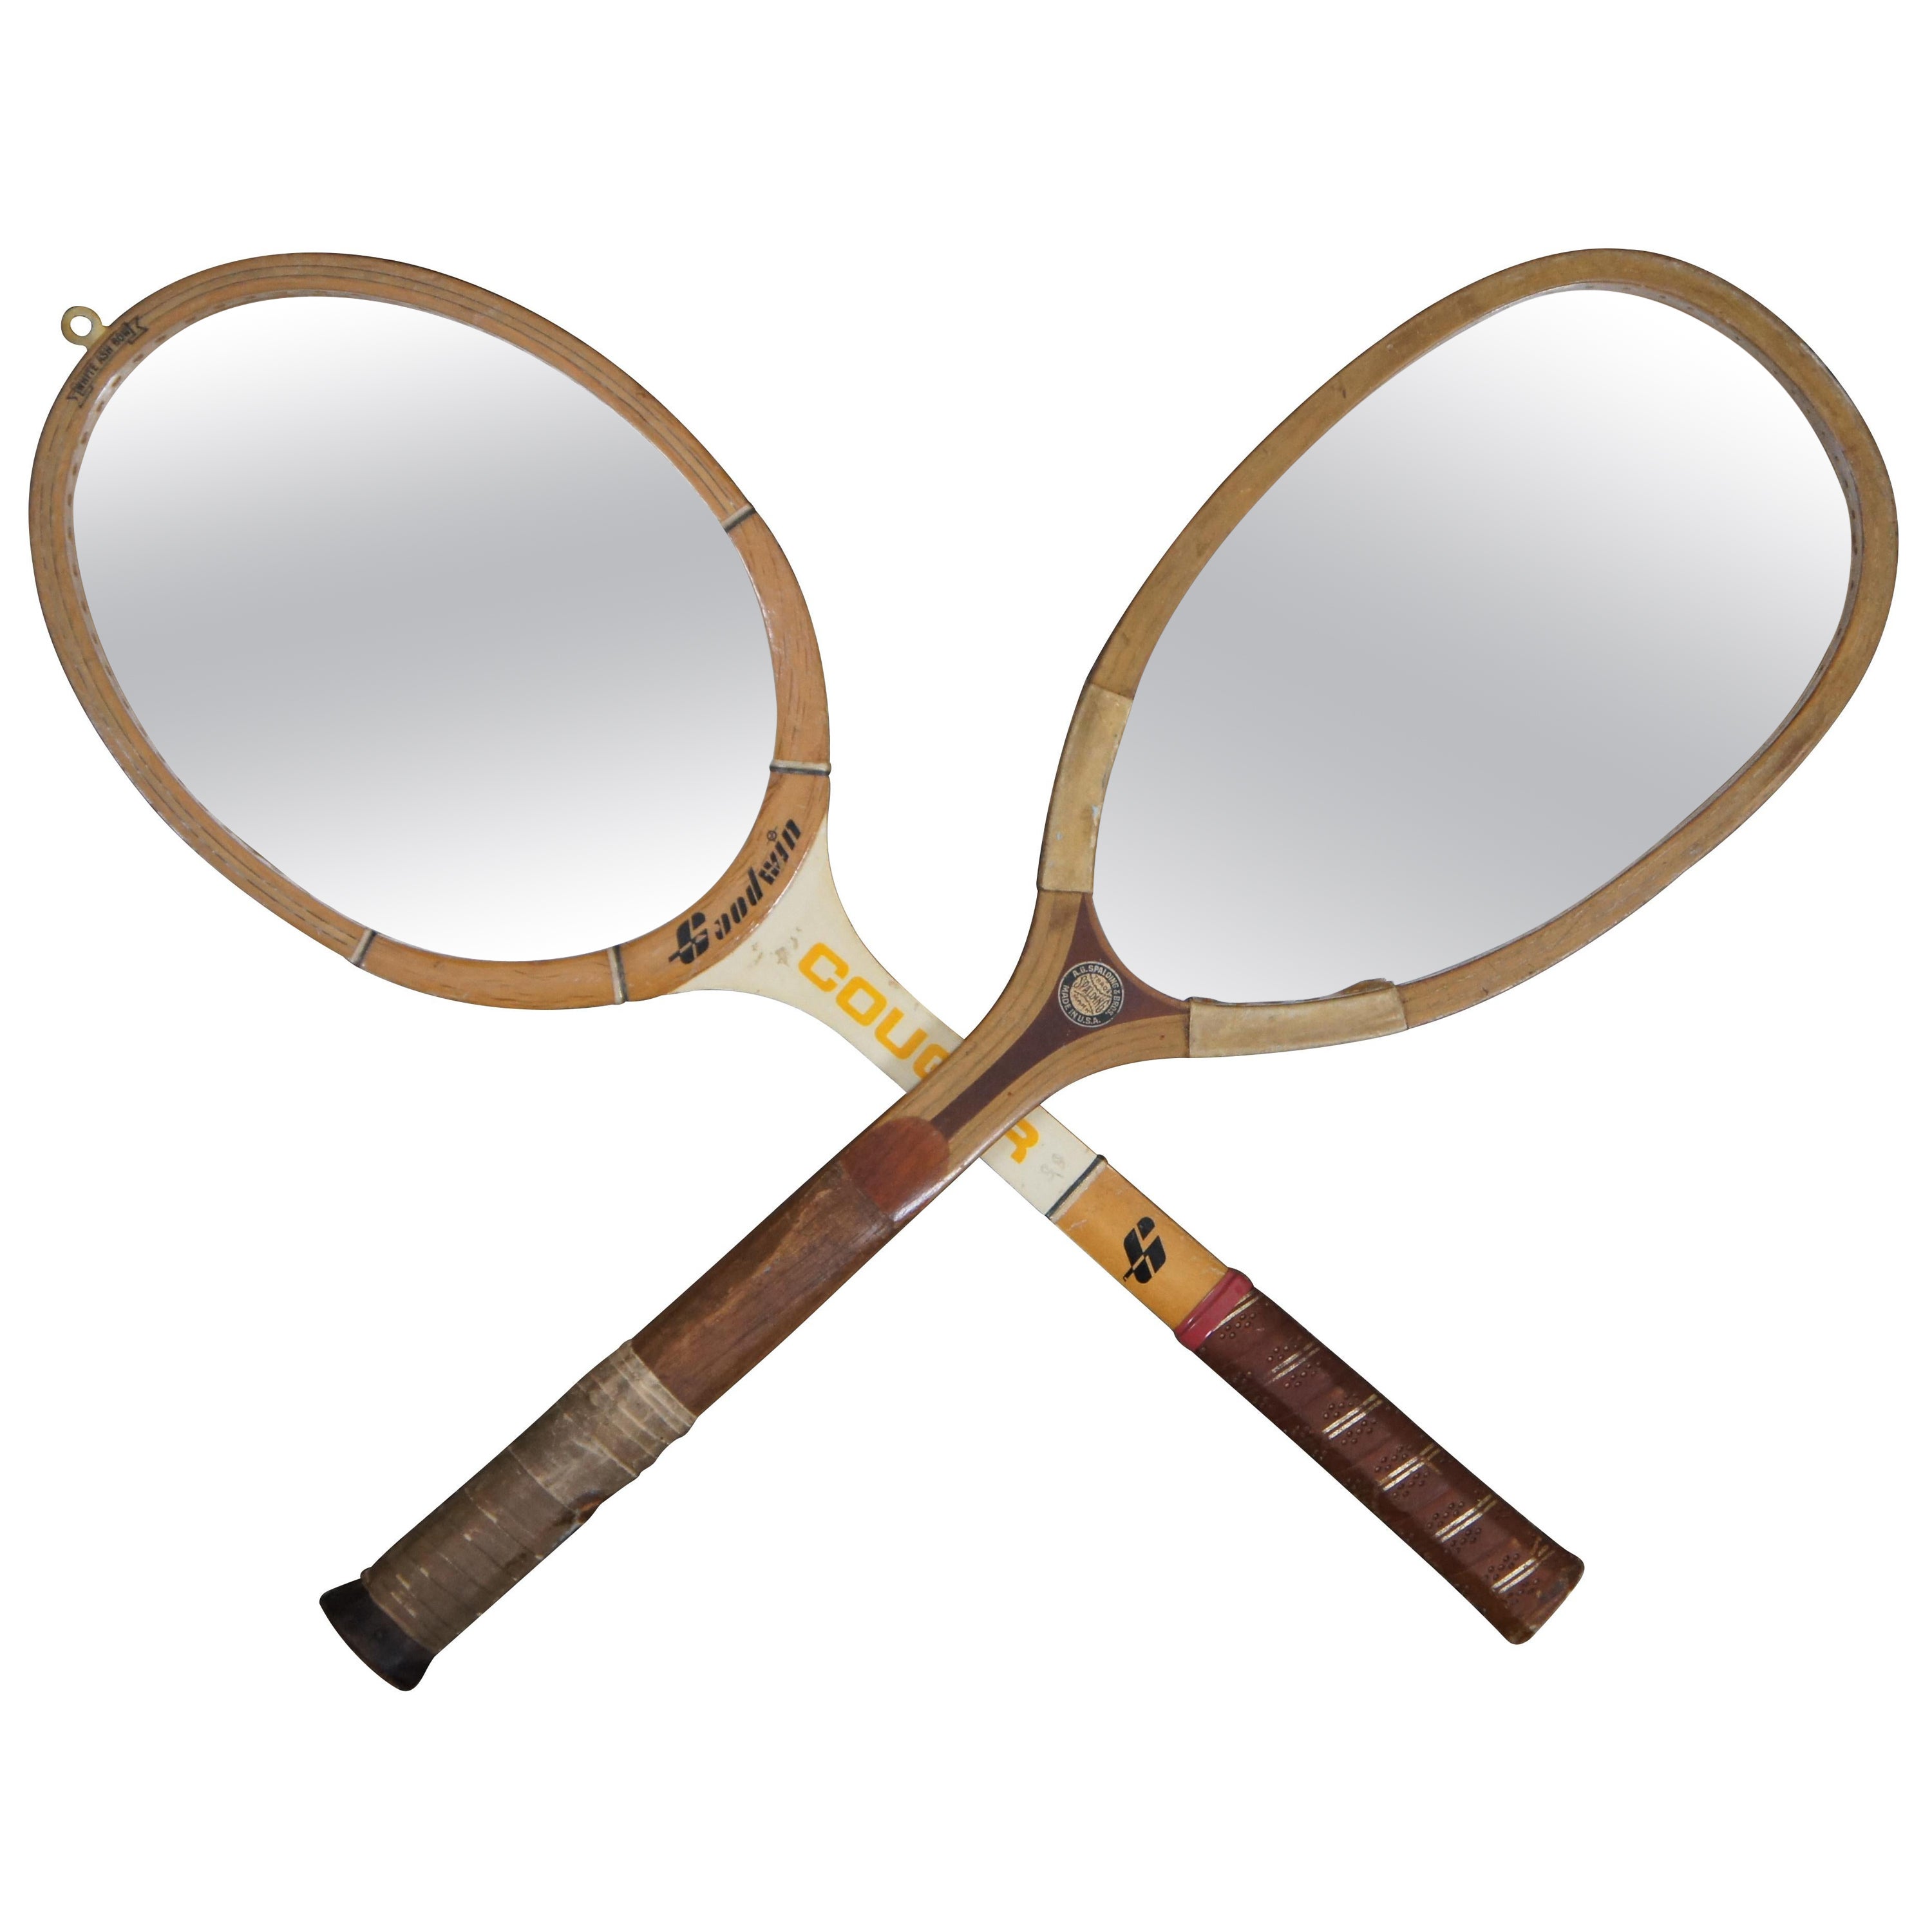 2 Retro Wood Tennis Badmitton Game Sport Racket Mirrors Goodwin Spaulding 27"